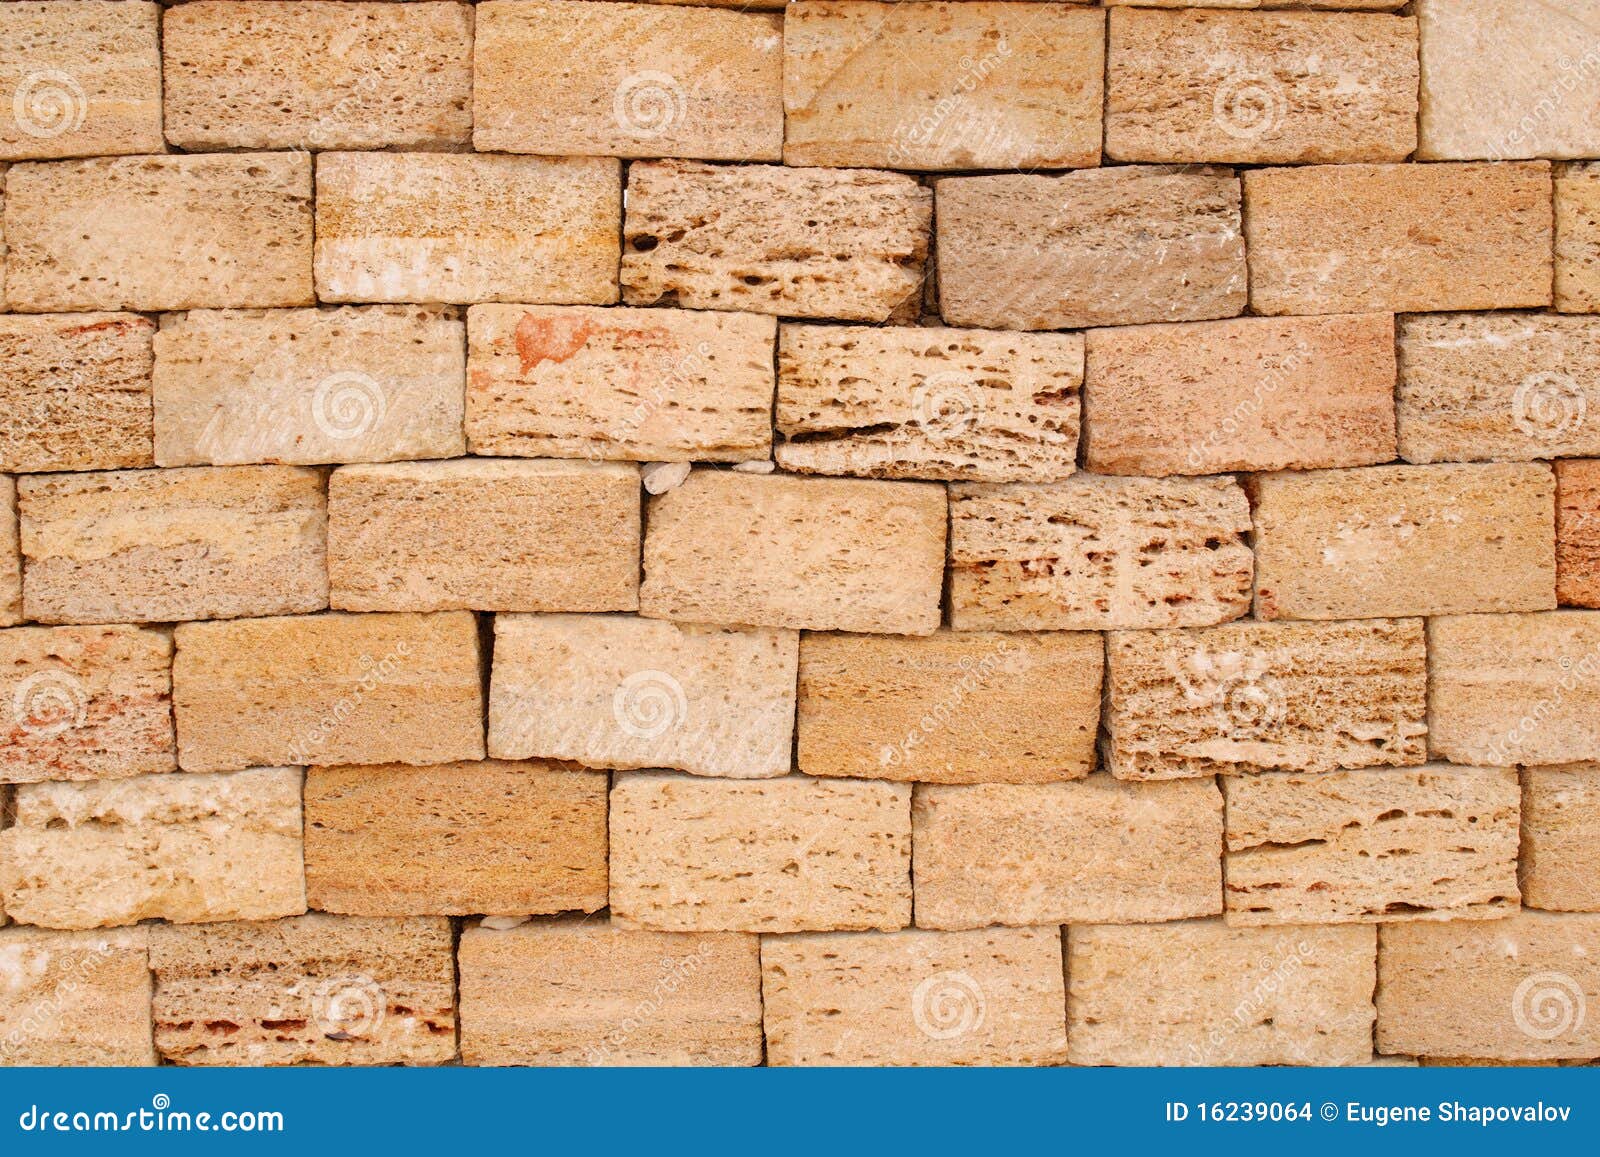 Sand bricks stock photo. Image of ancient, dirty, facade - 16239064